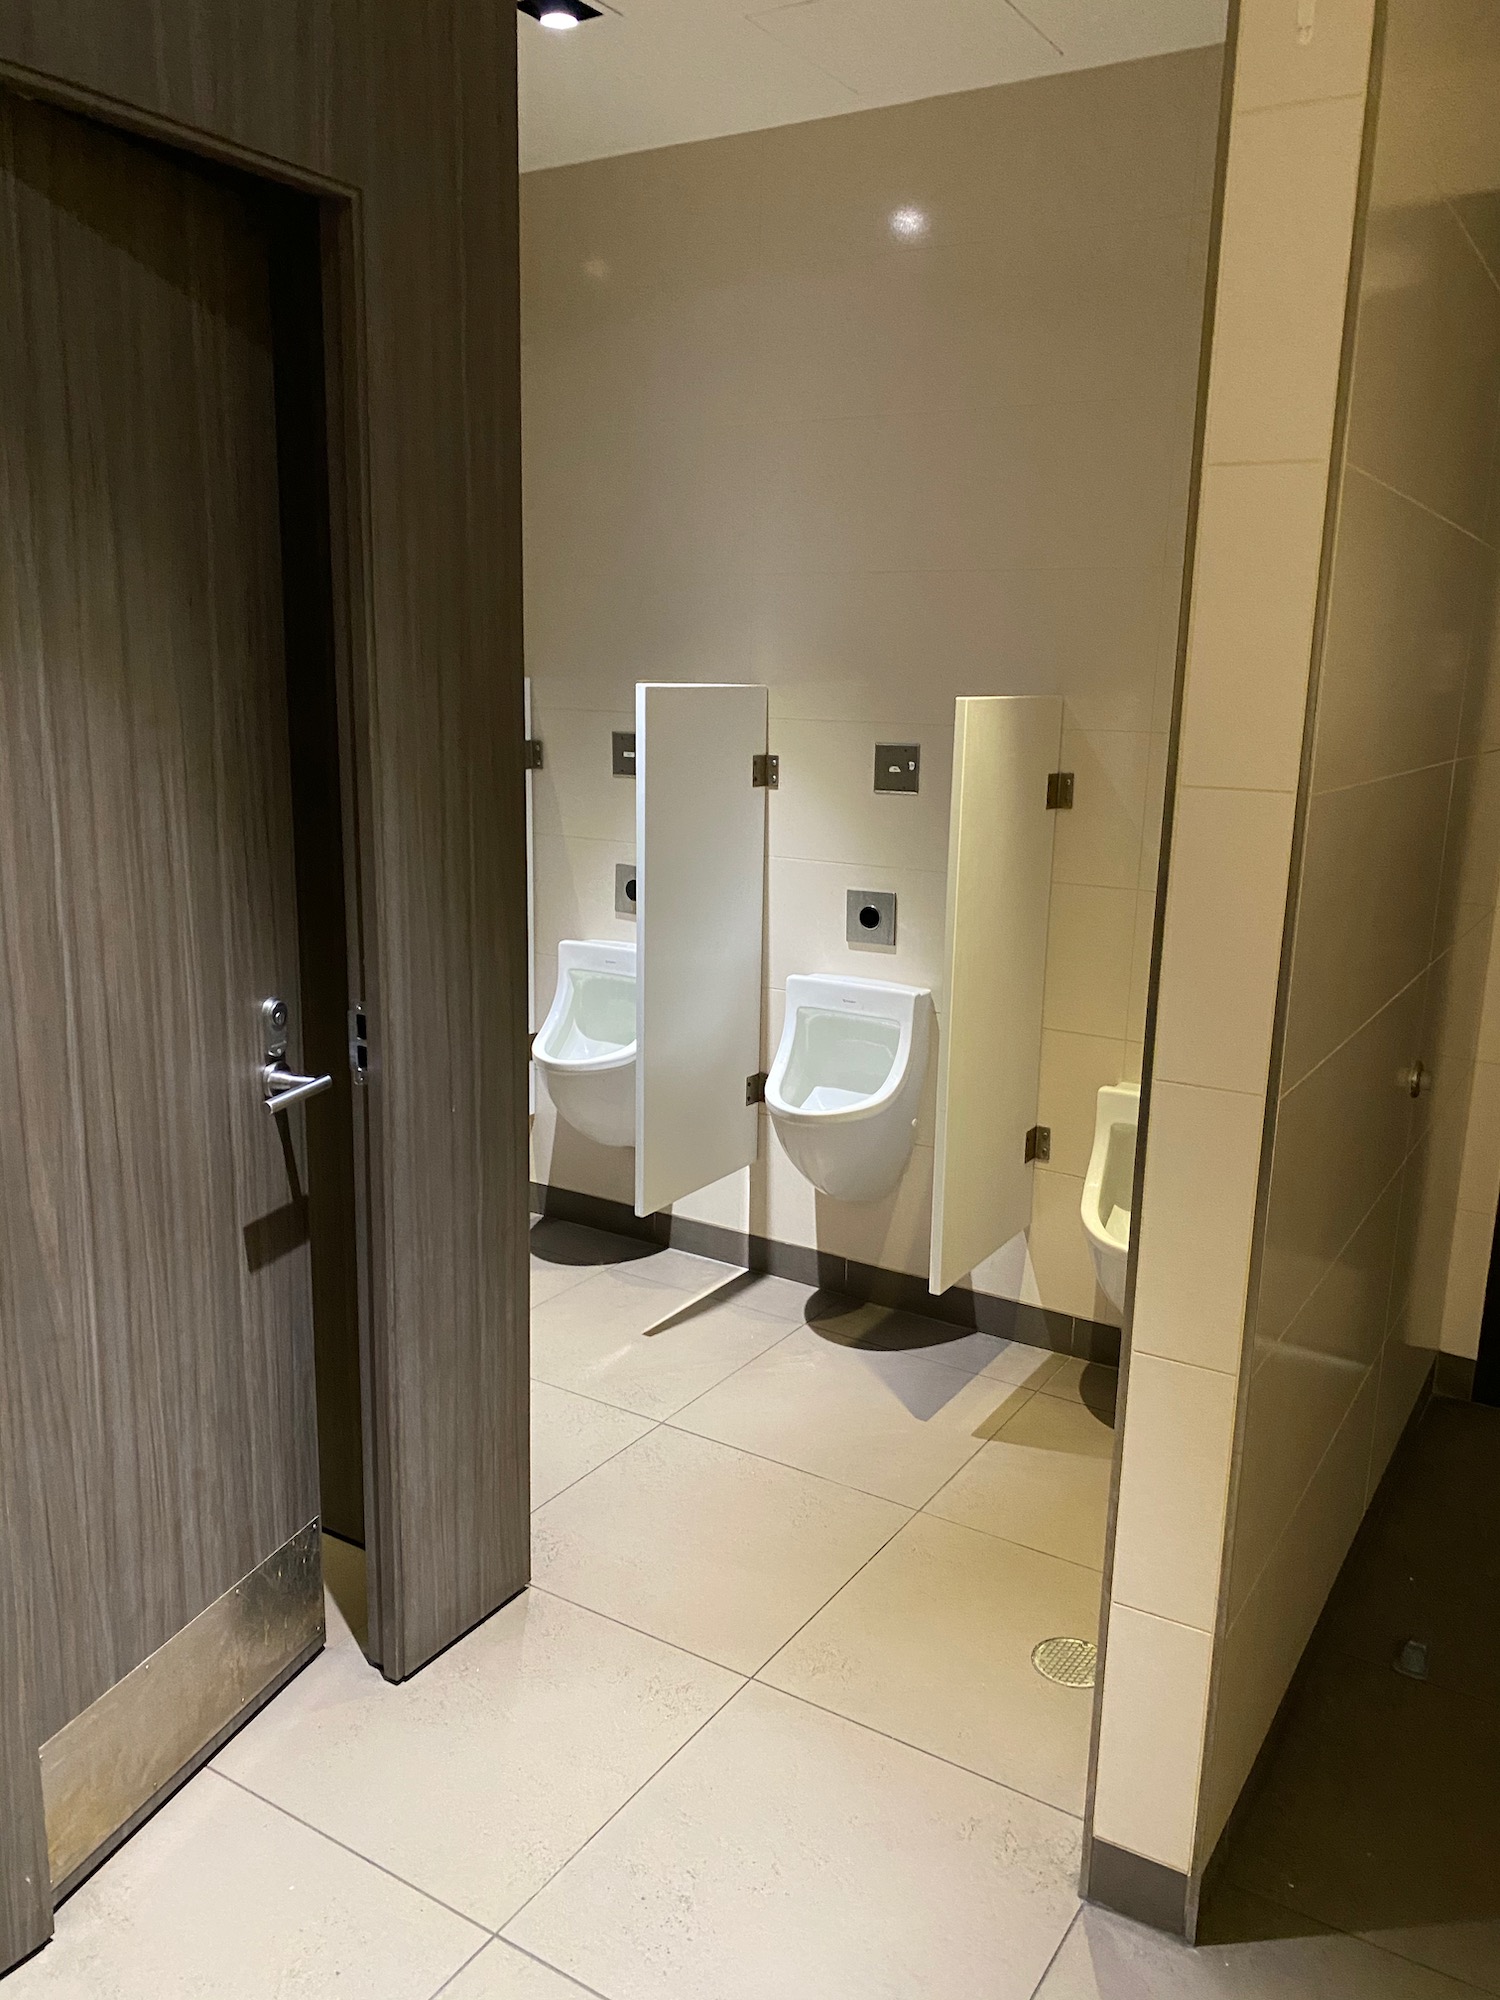 a bathroom with urinals and a door